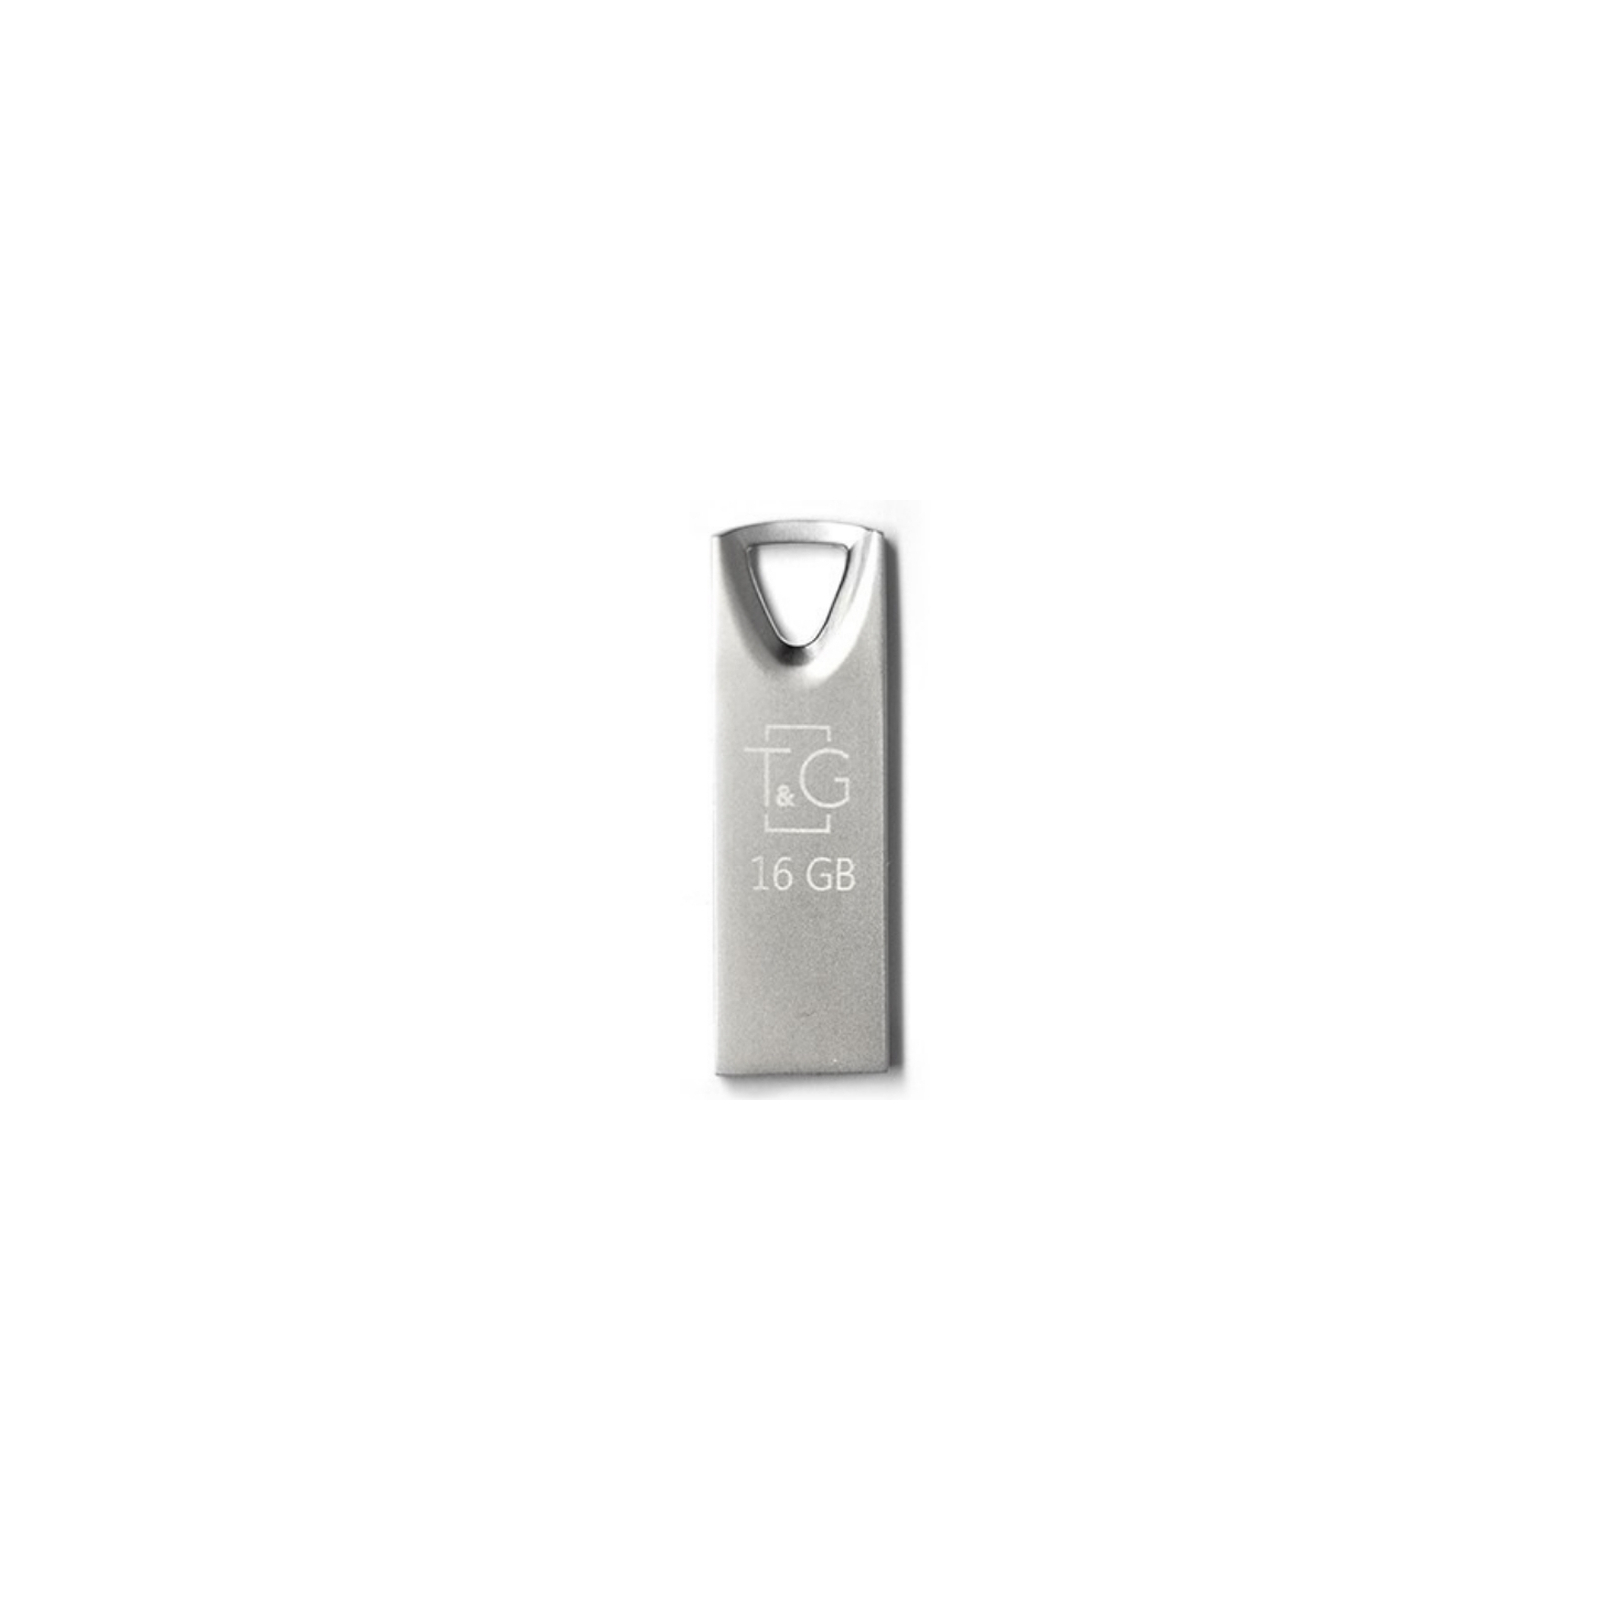 USB флеш накопитель T&G 16GB 117 Metal Series Gold USB 2.0 (TG117GD-16G)